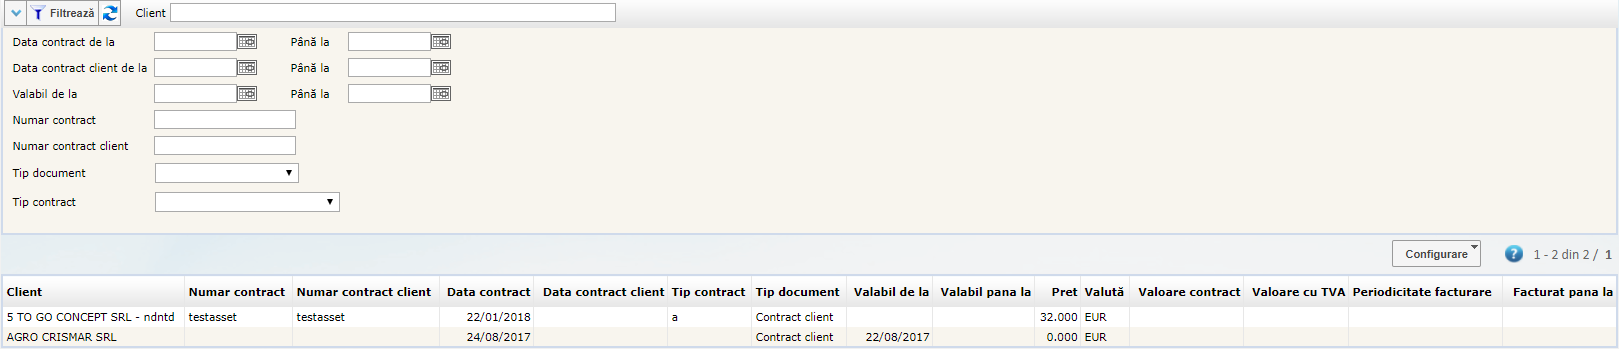 Asseturi - Fisa asset - Lista contracte clienti.png